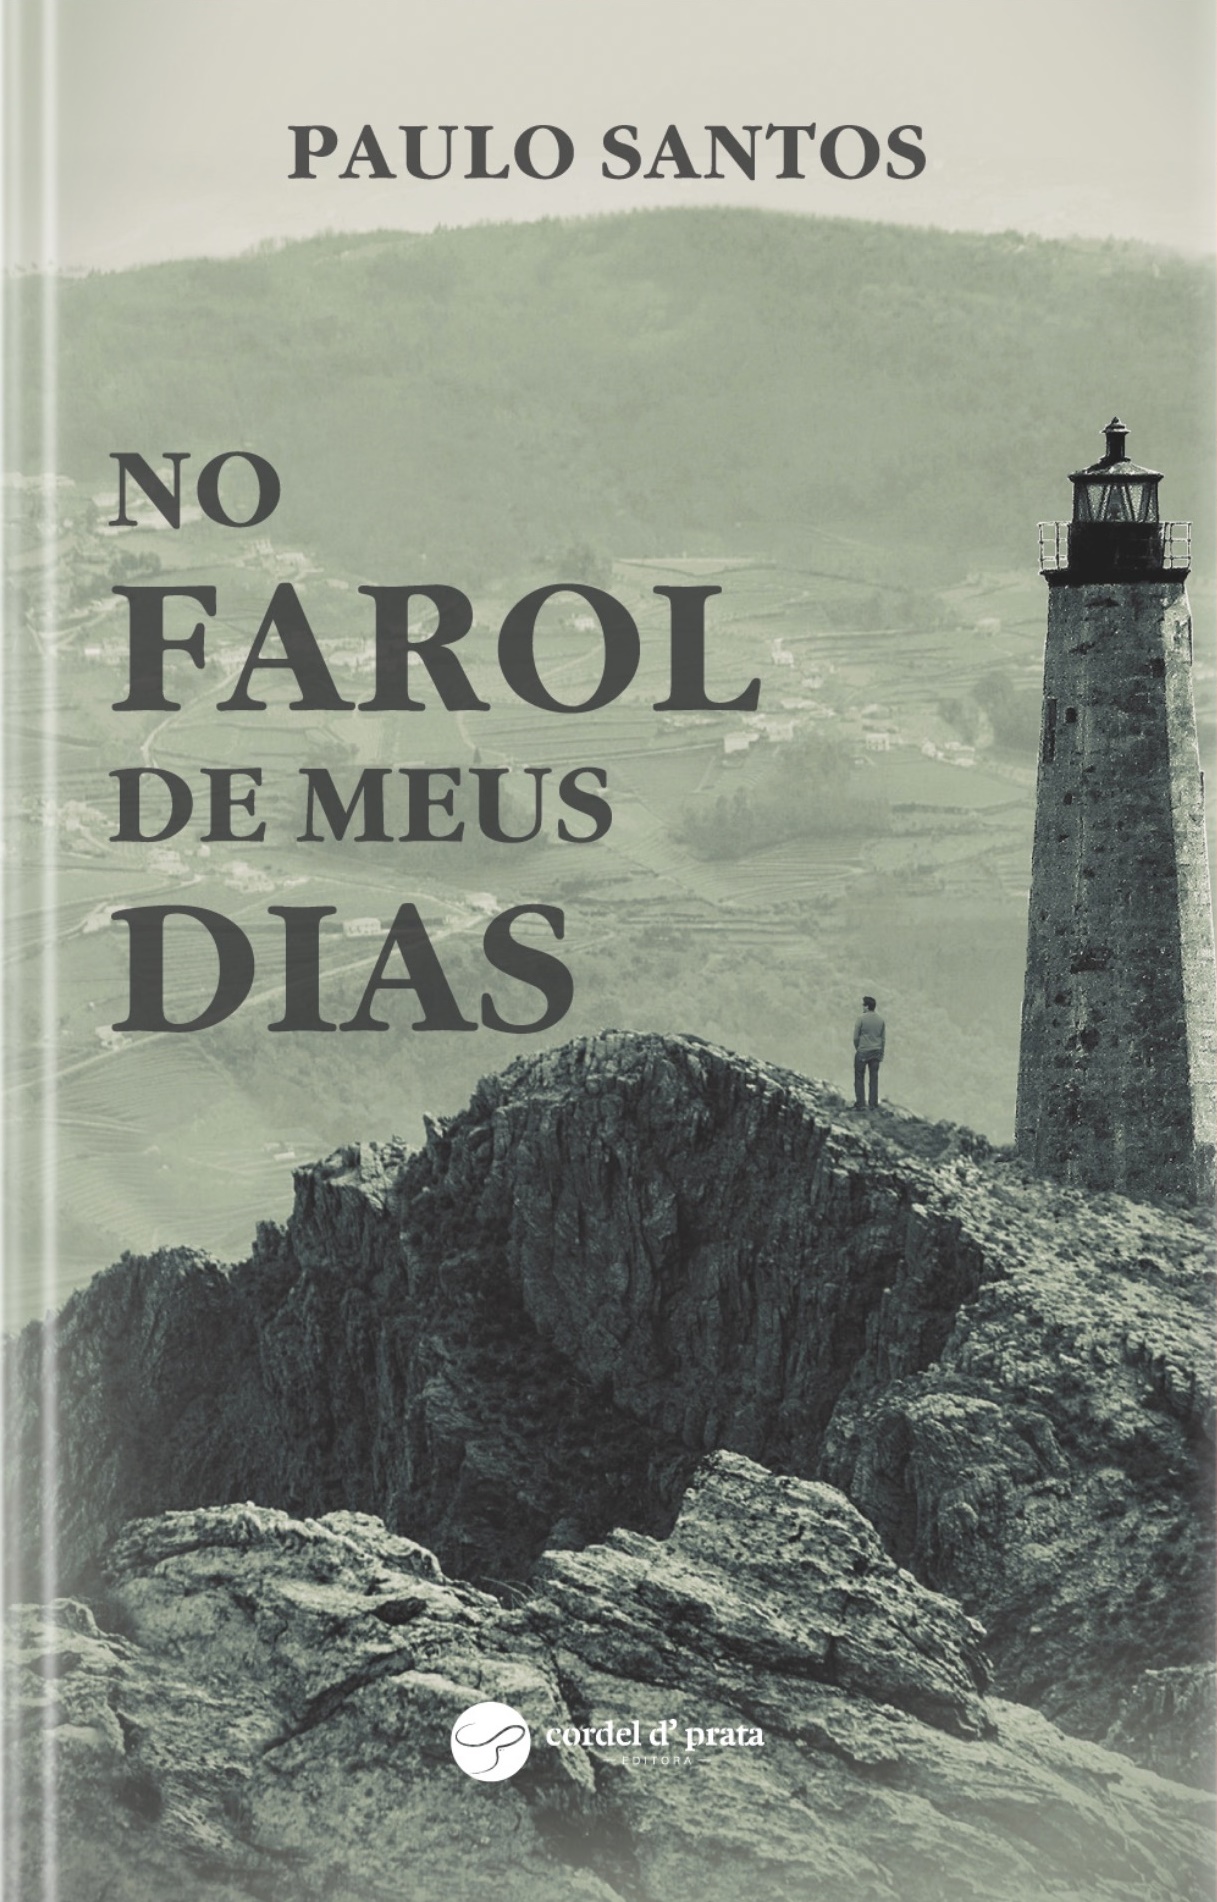 Presentación do libro «No farol de meus dias», obra de Paulo Santos